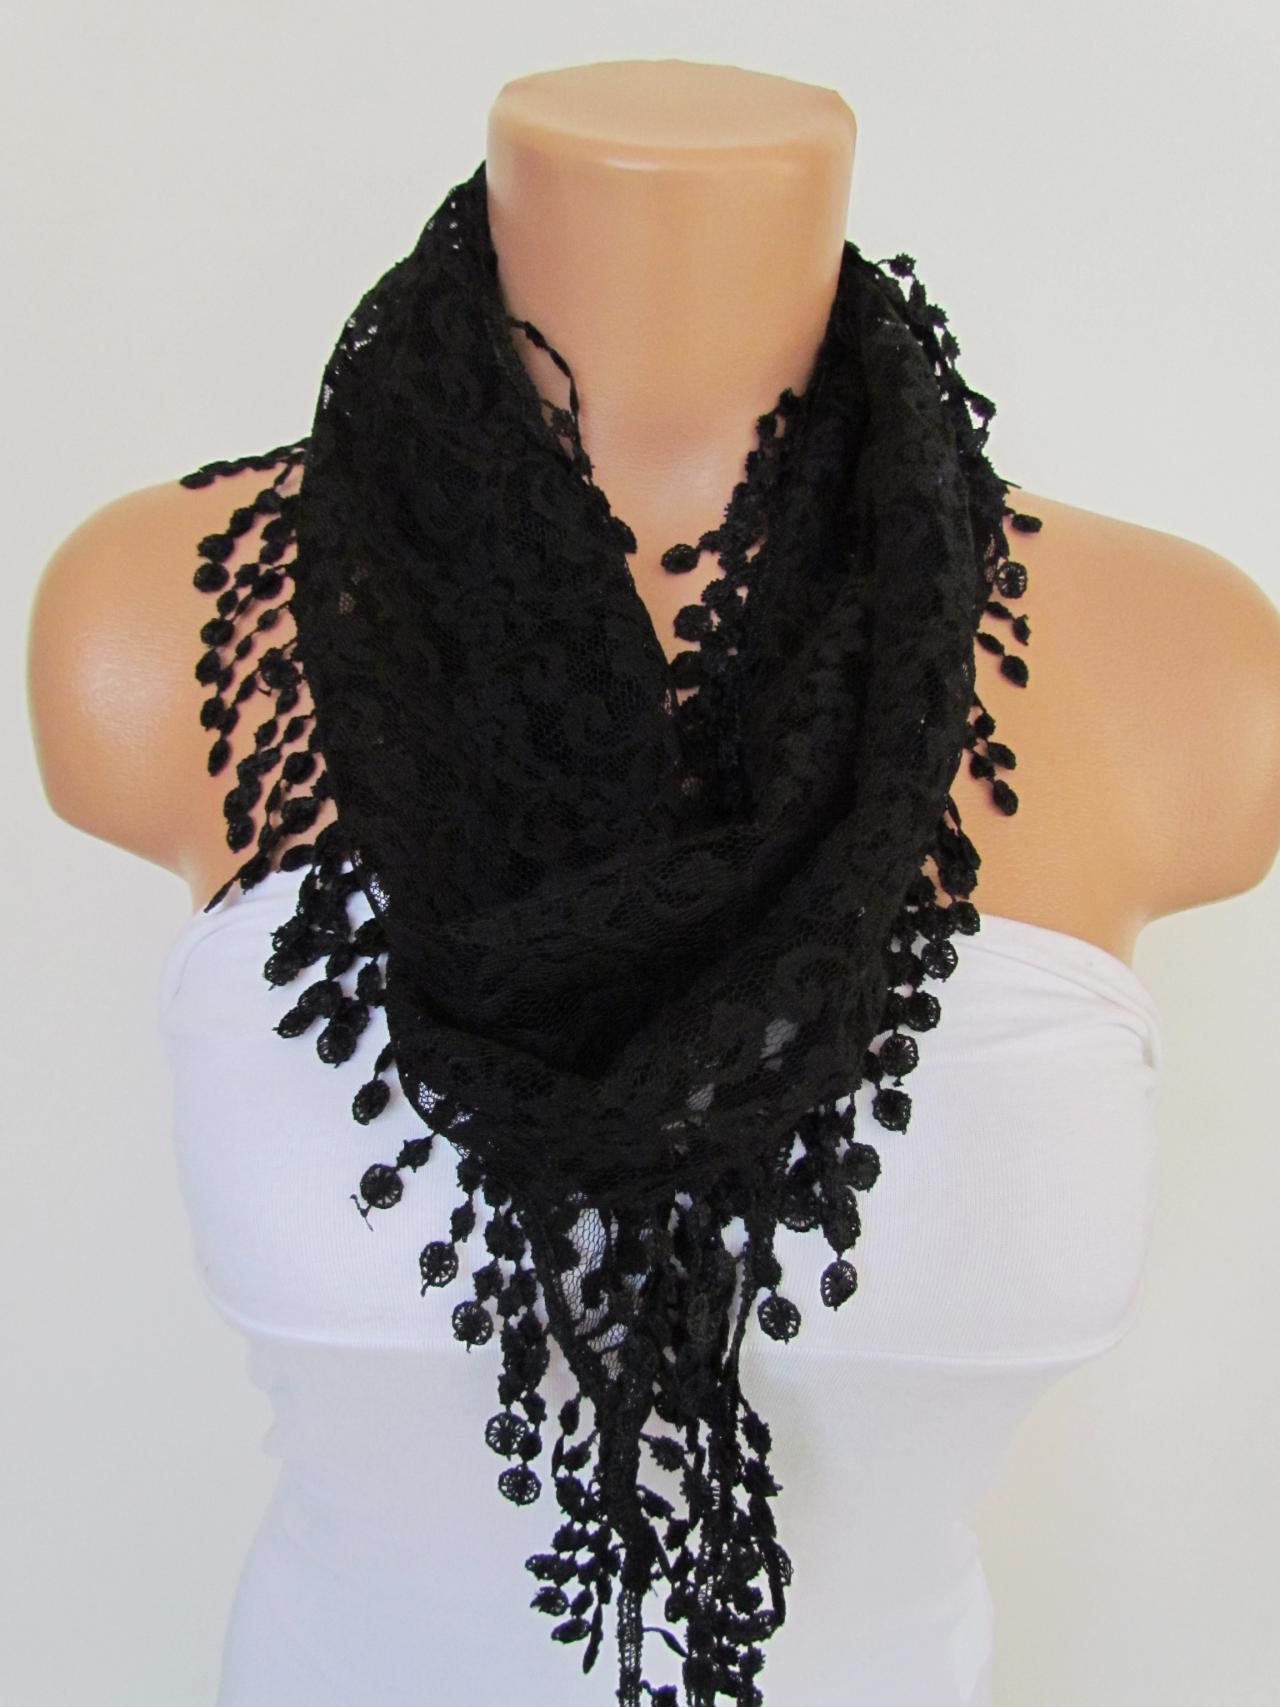 Black Long Scarf With Fringe-Winter Fashion Scarf-Headband-Necklace ...